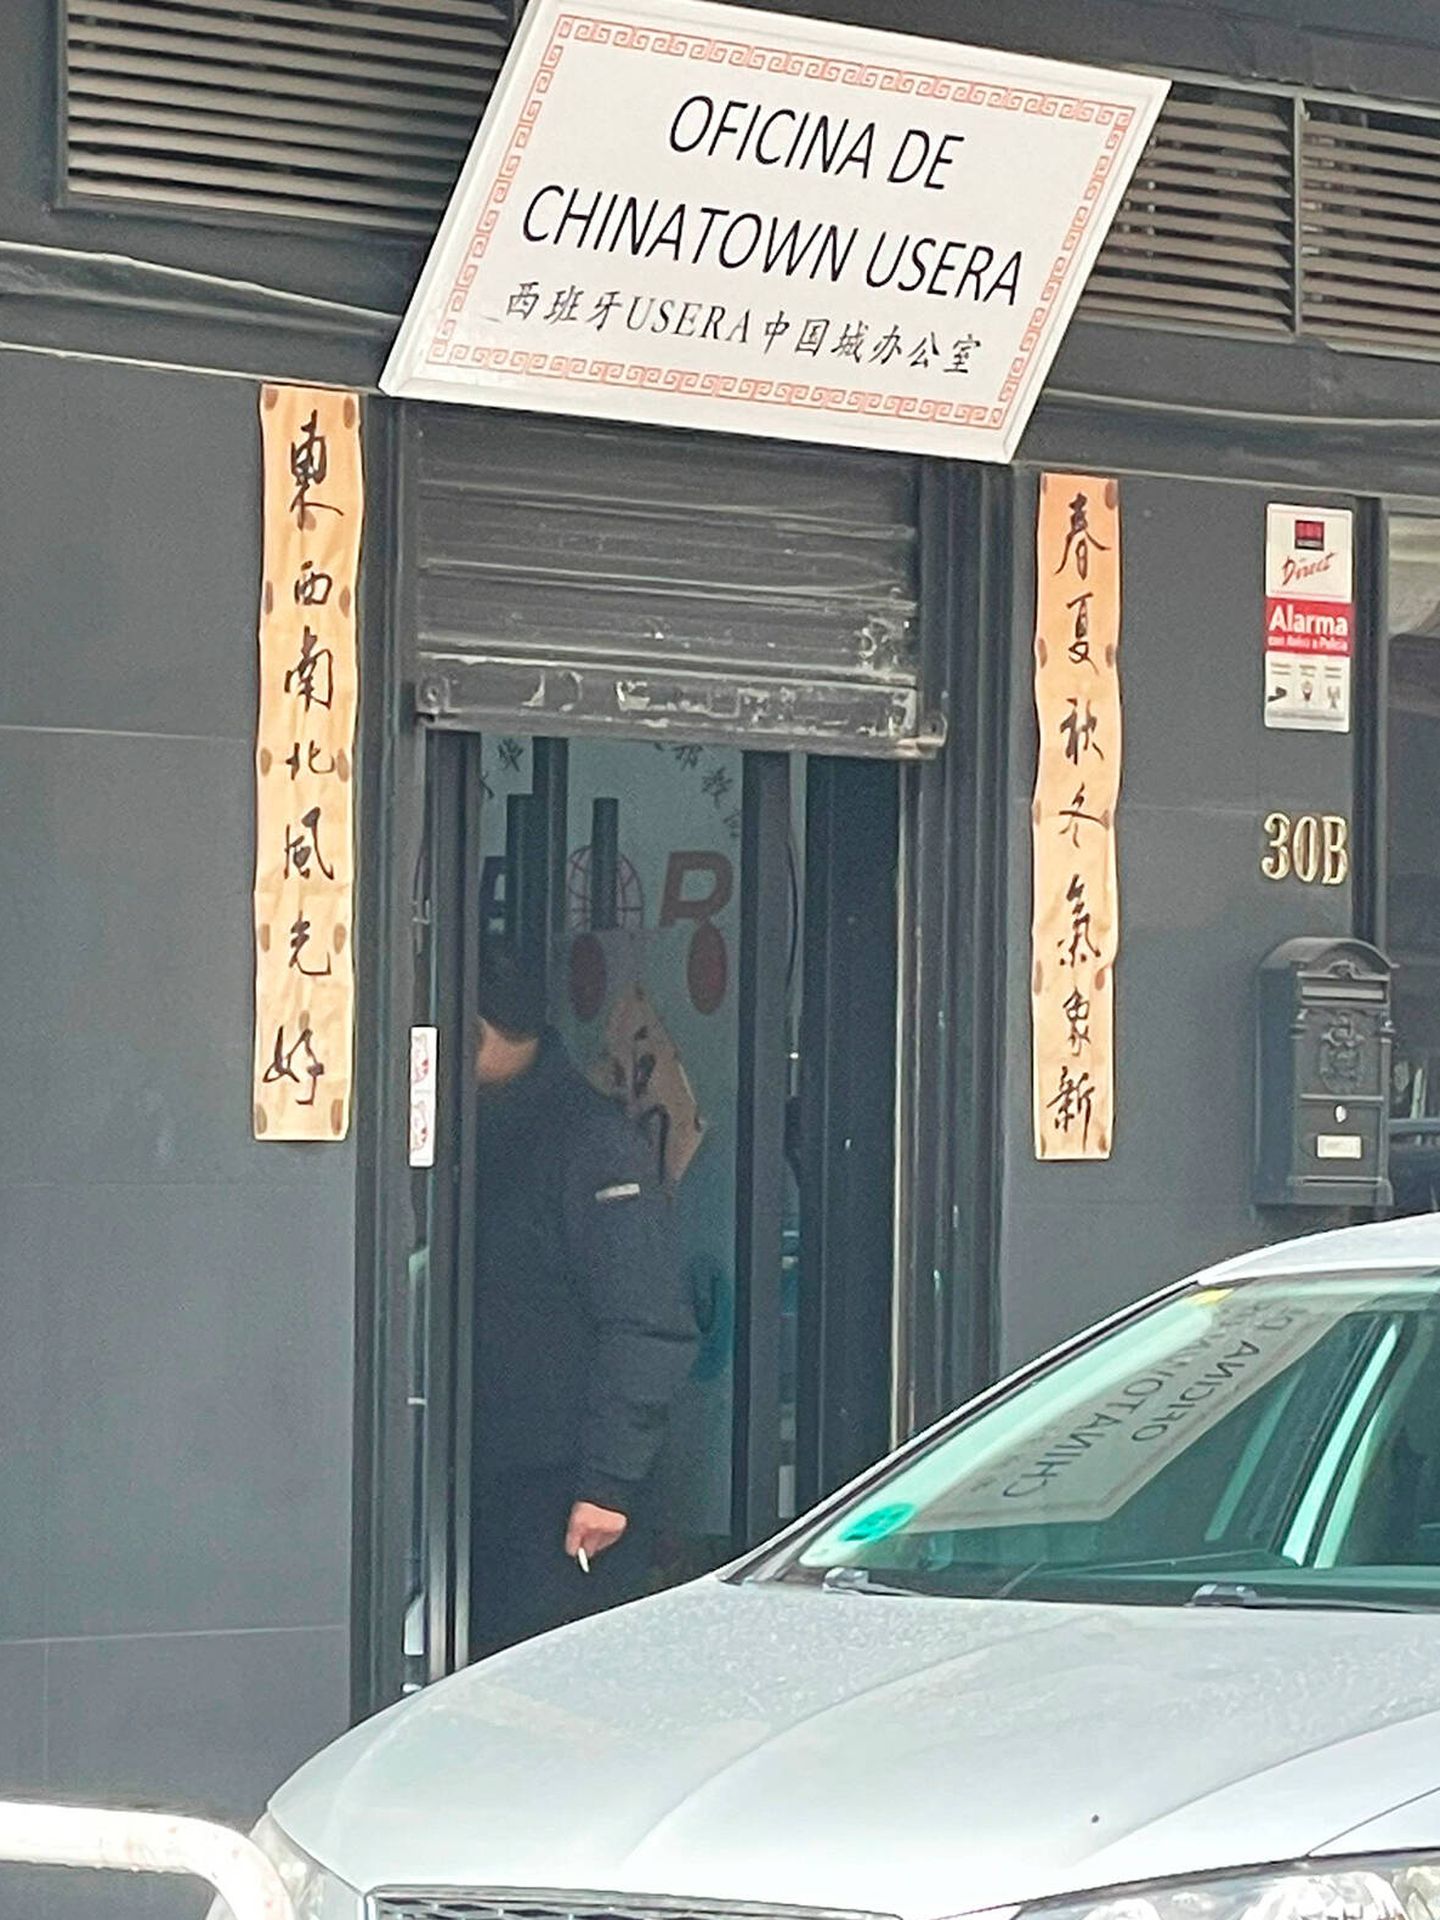 Entrada a la oficina del Chinatown de Usera. (A. V.)